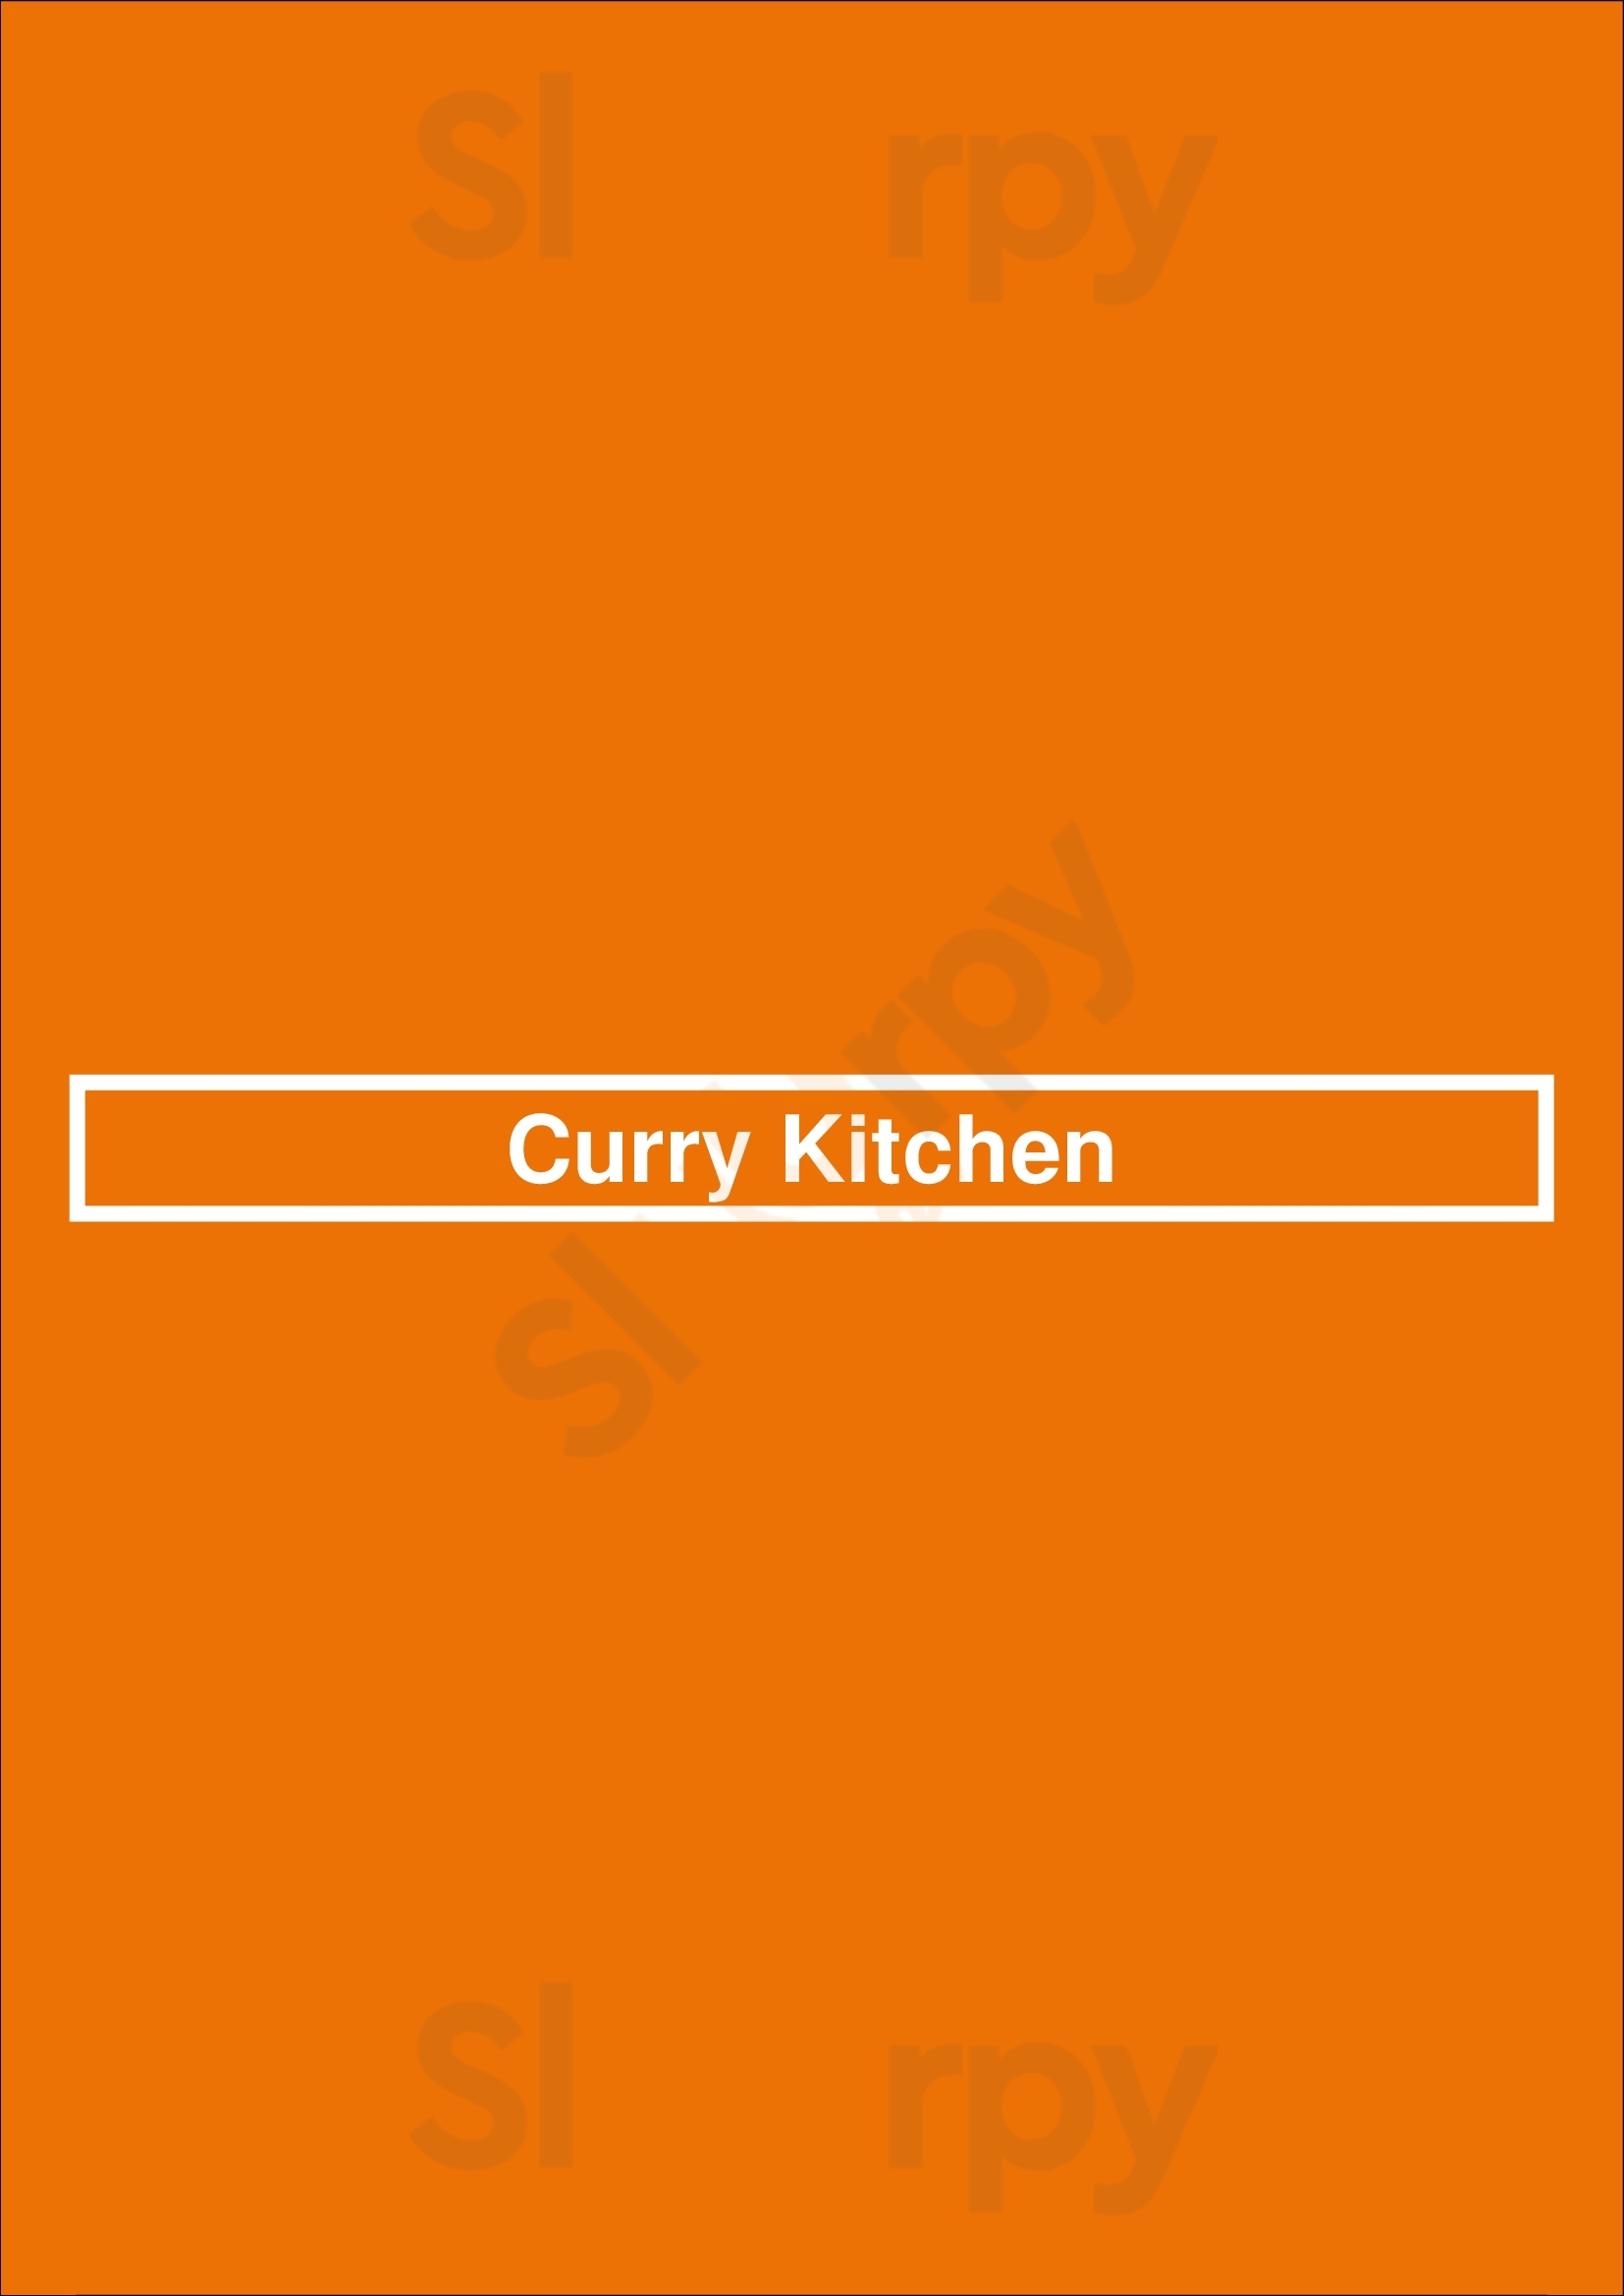 Curry Kitchen Lincoln Menu - 1